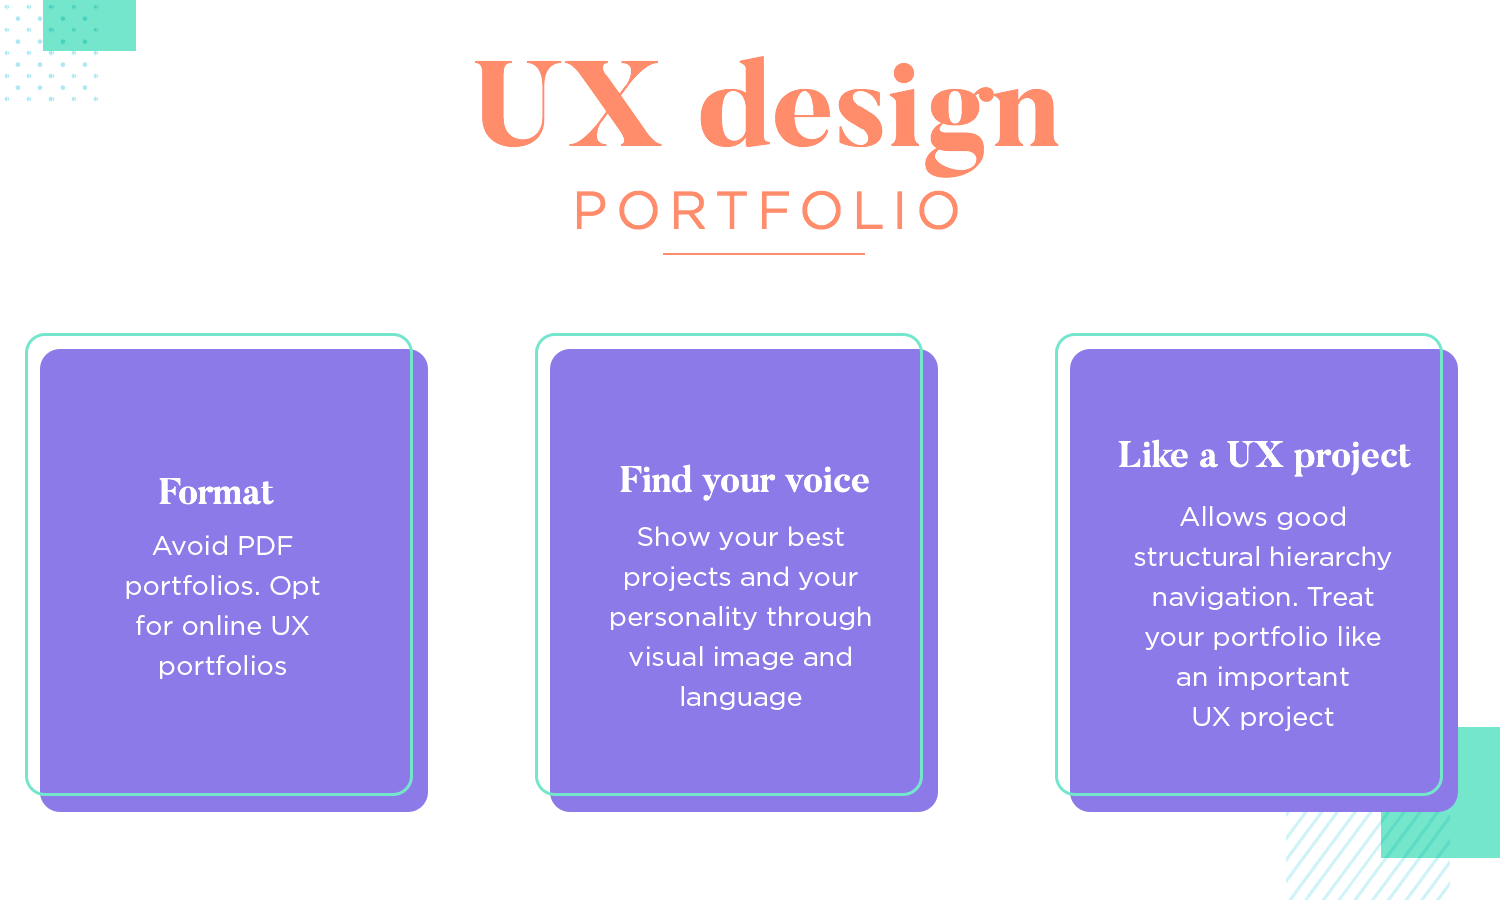 list of basic guidelines for a ux design portfolio